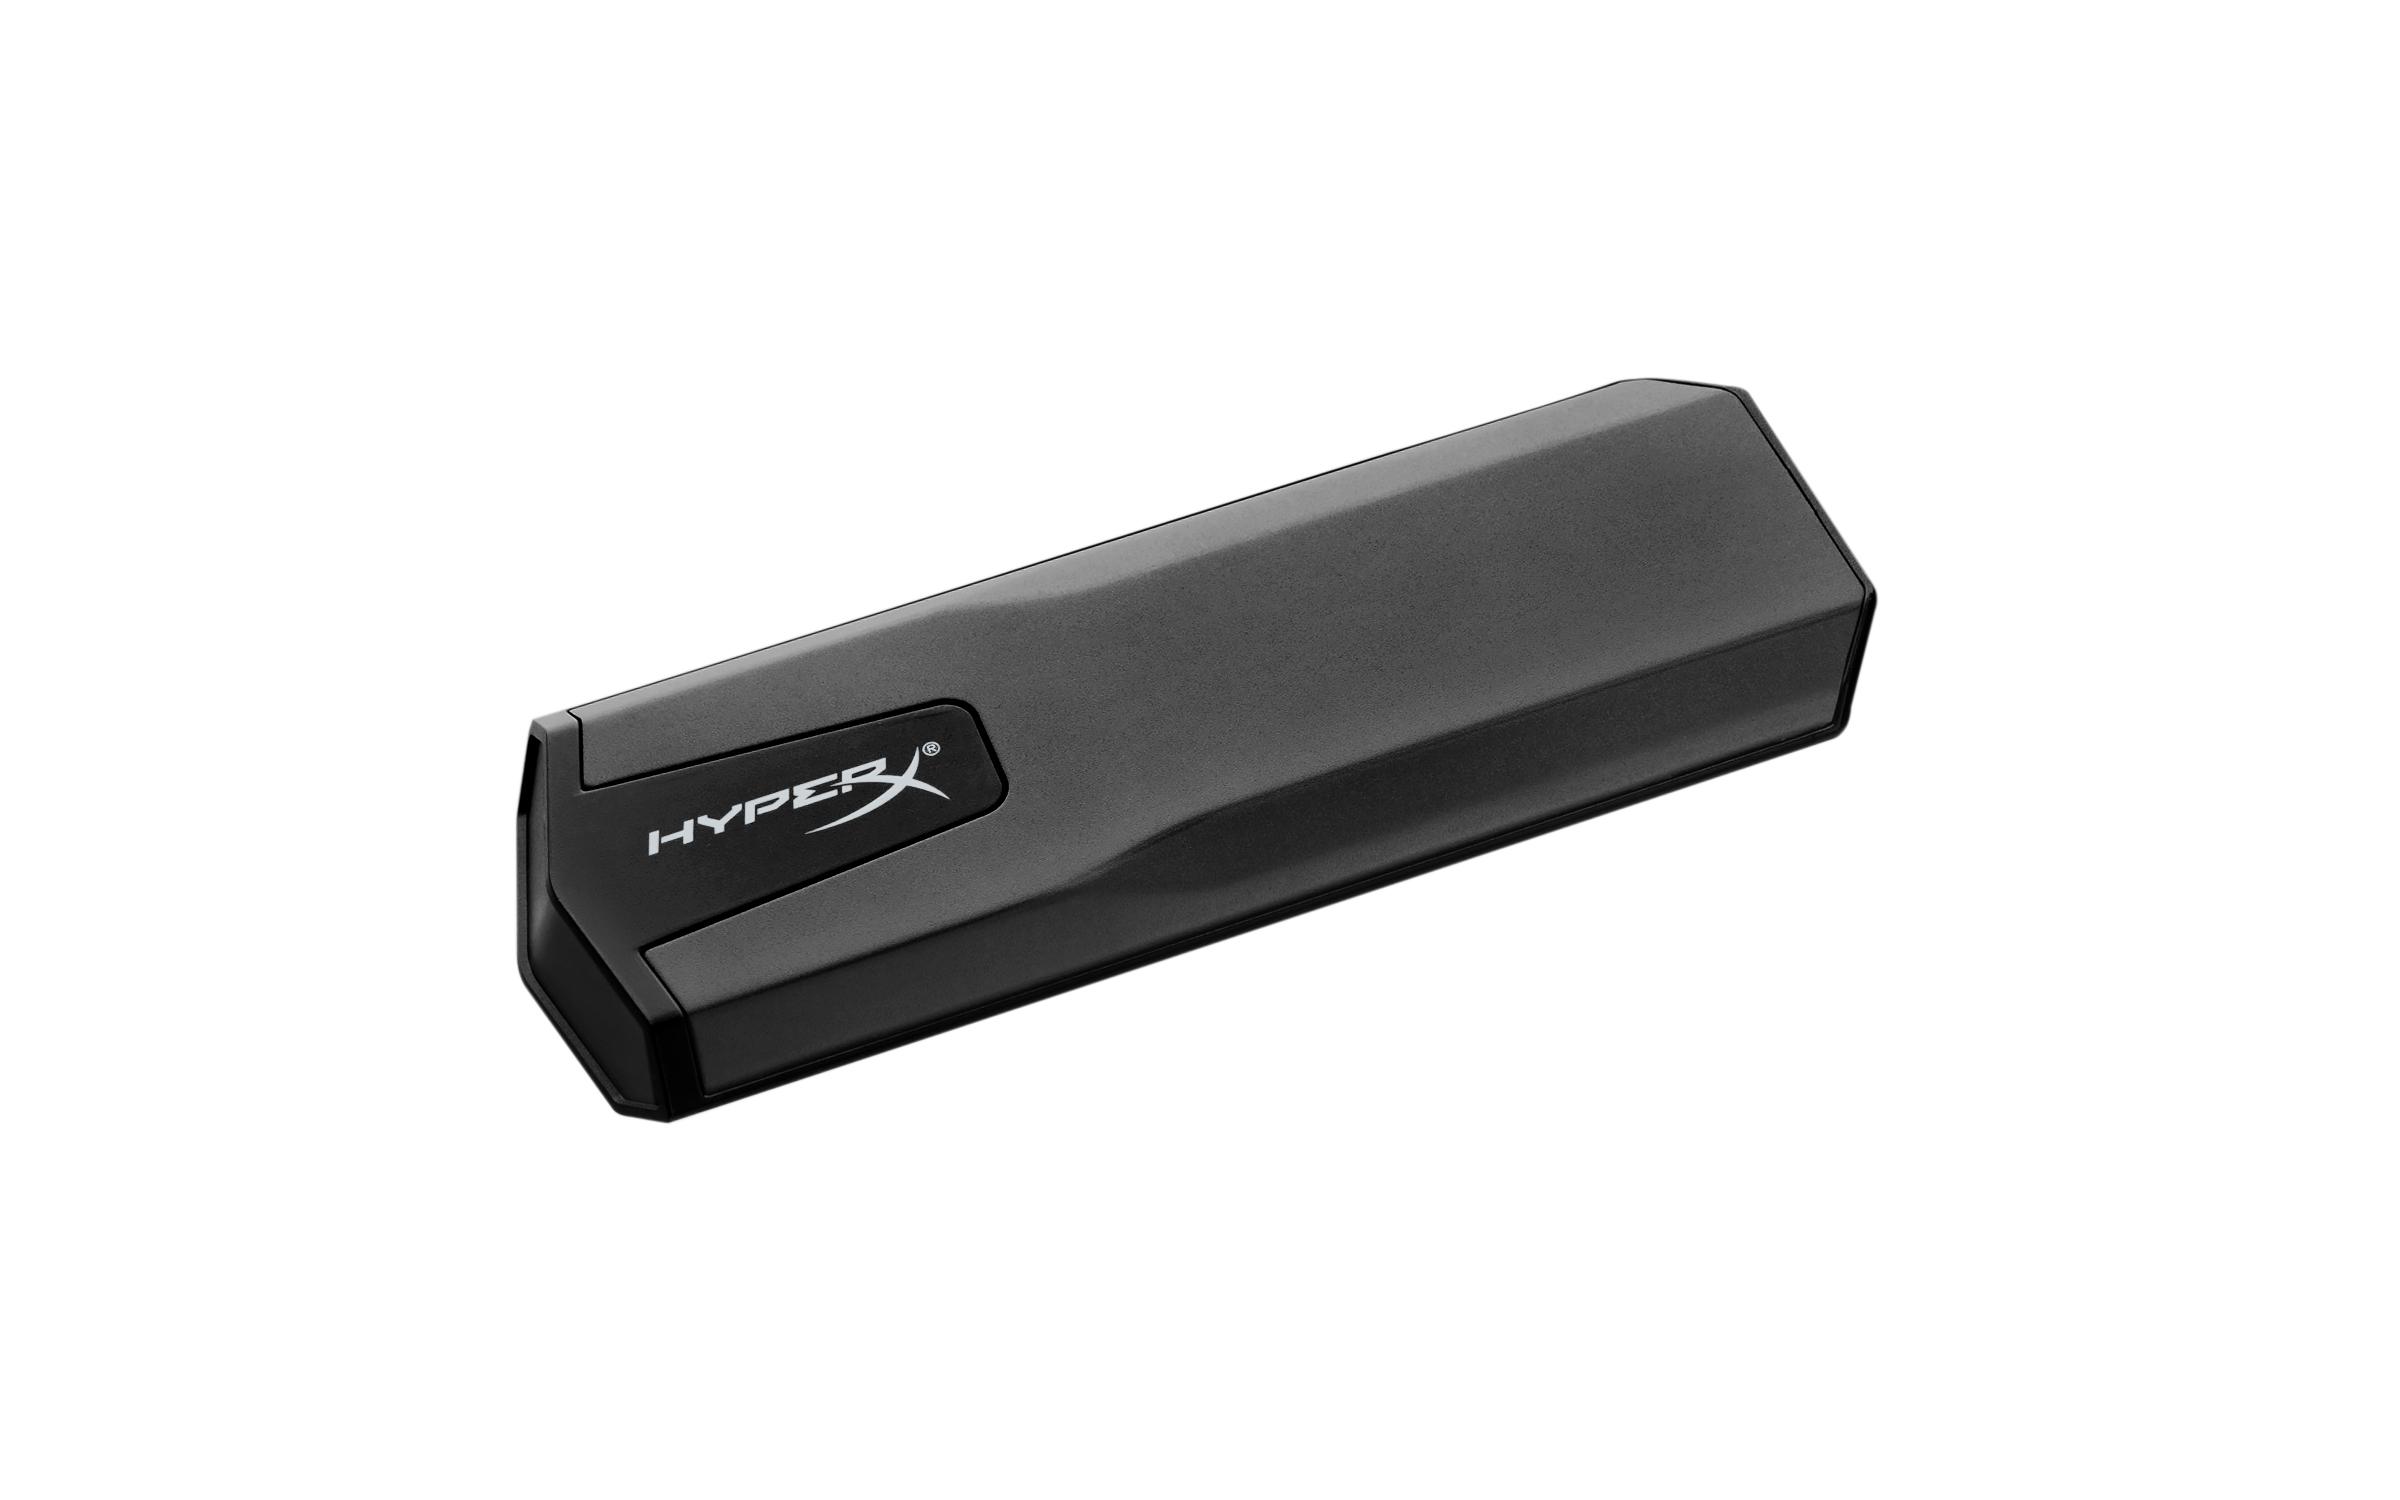 Външен Solid State Drive (SSD) Kingston HyperX Savage EXO 480GB USB 3.1 Gen 2 Type-C